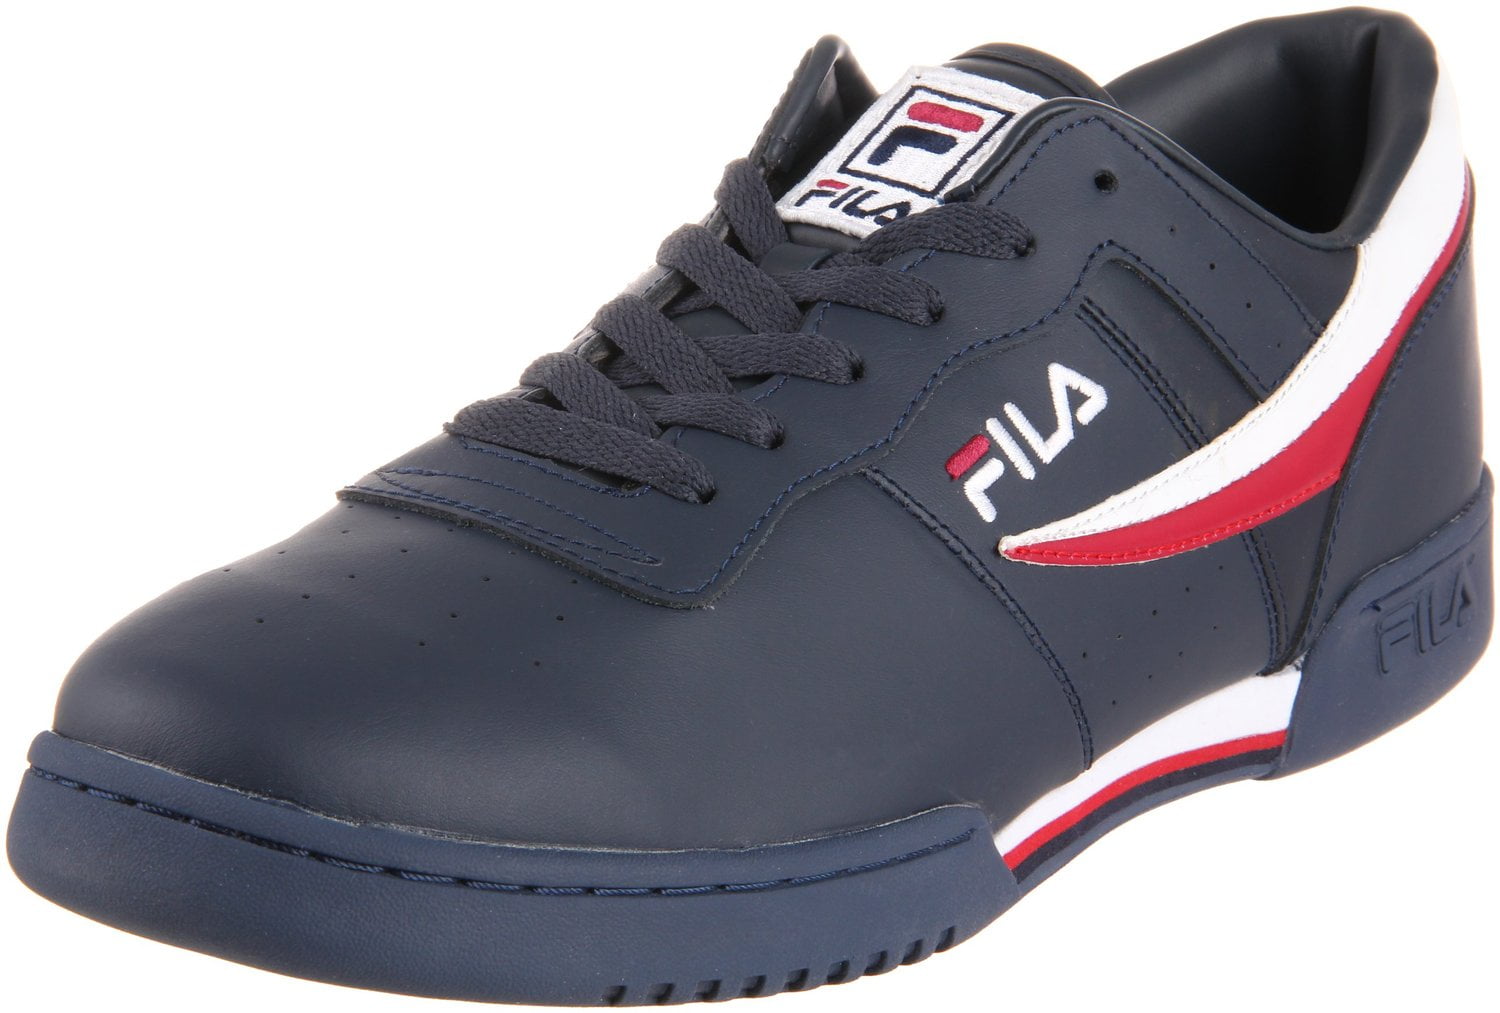 Fila Men's Original Vintage Fitness Shoe,Navy/White/Red,9.5 M - Walmart.com